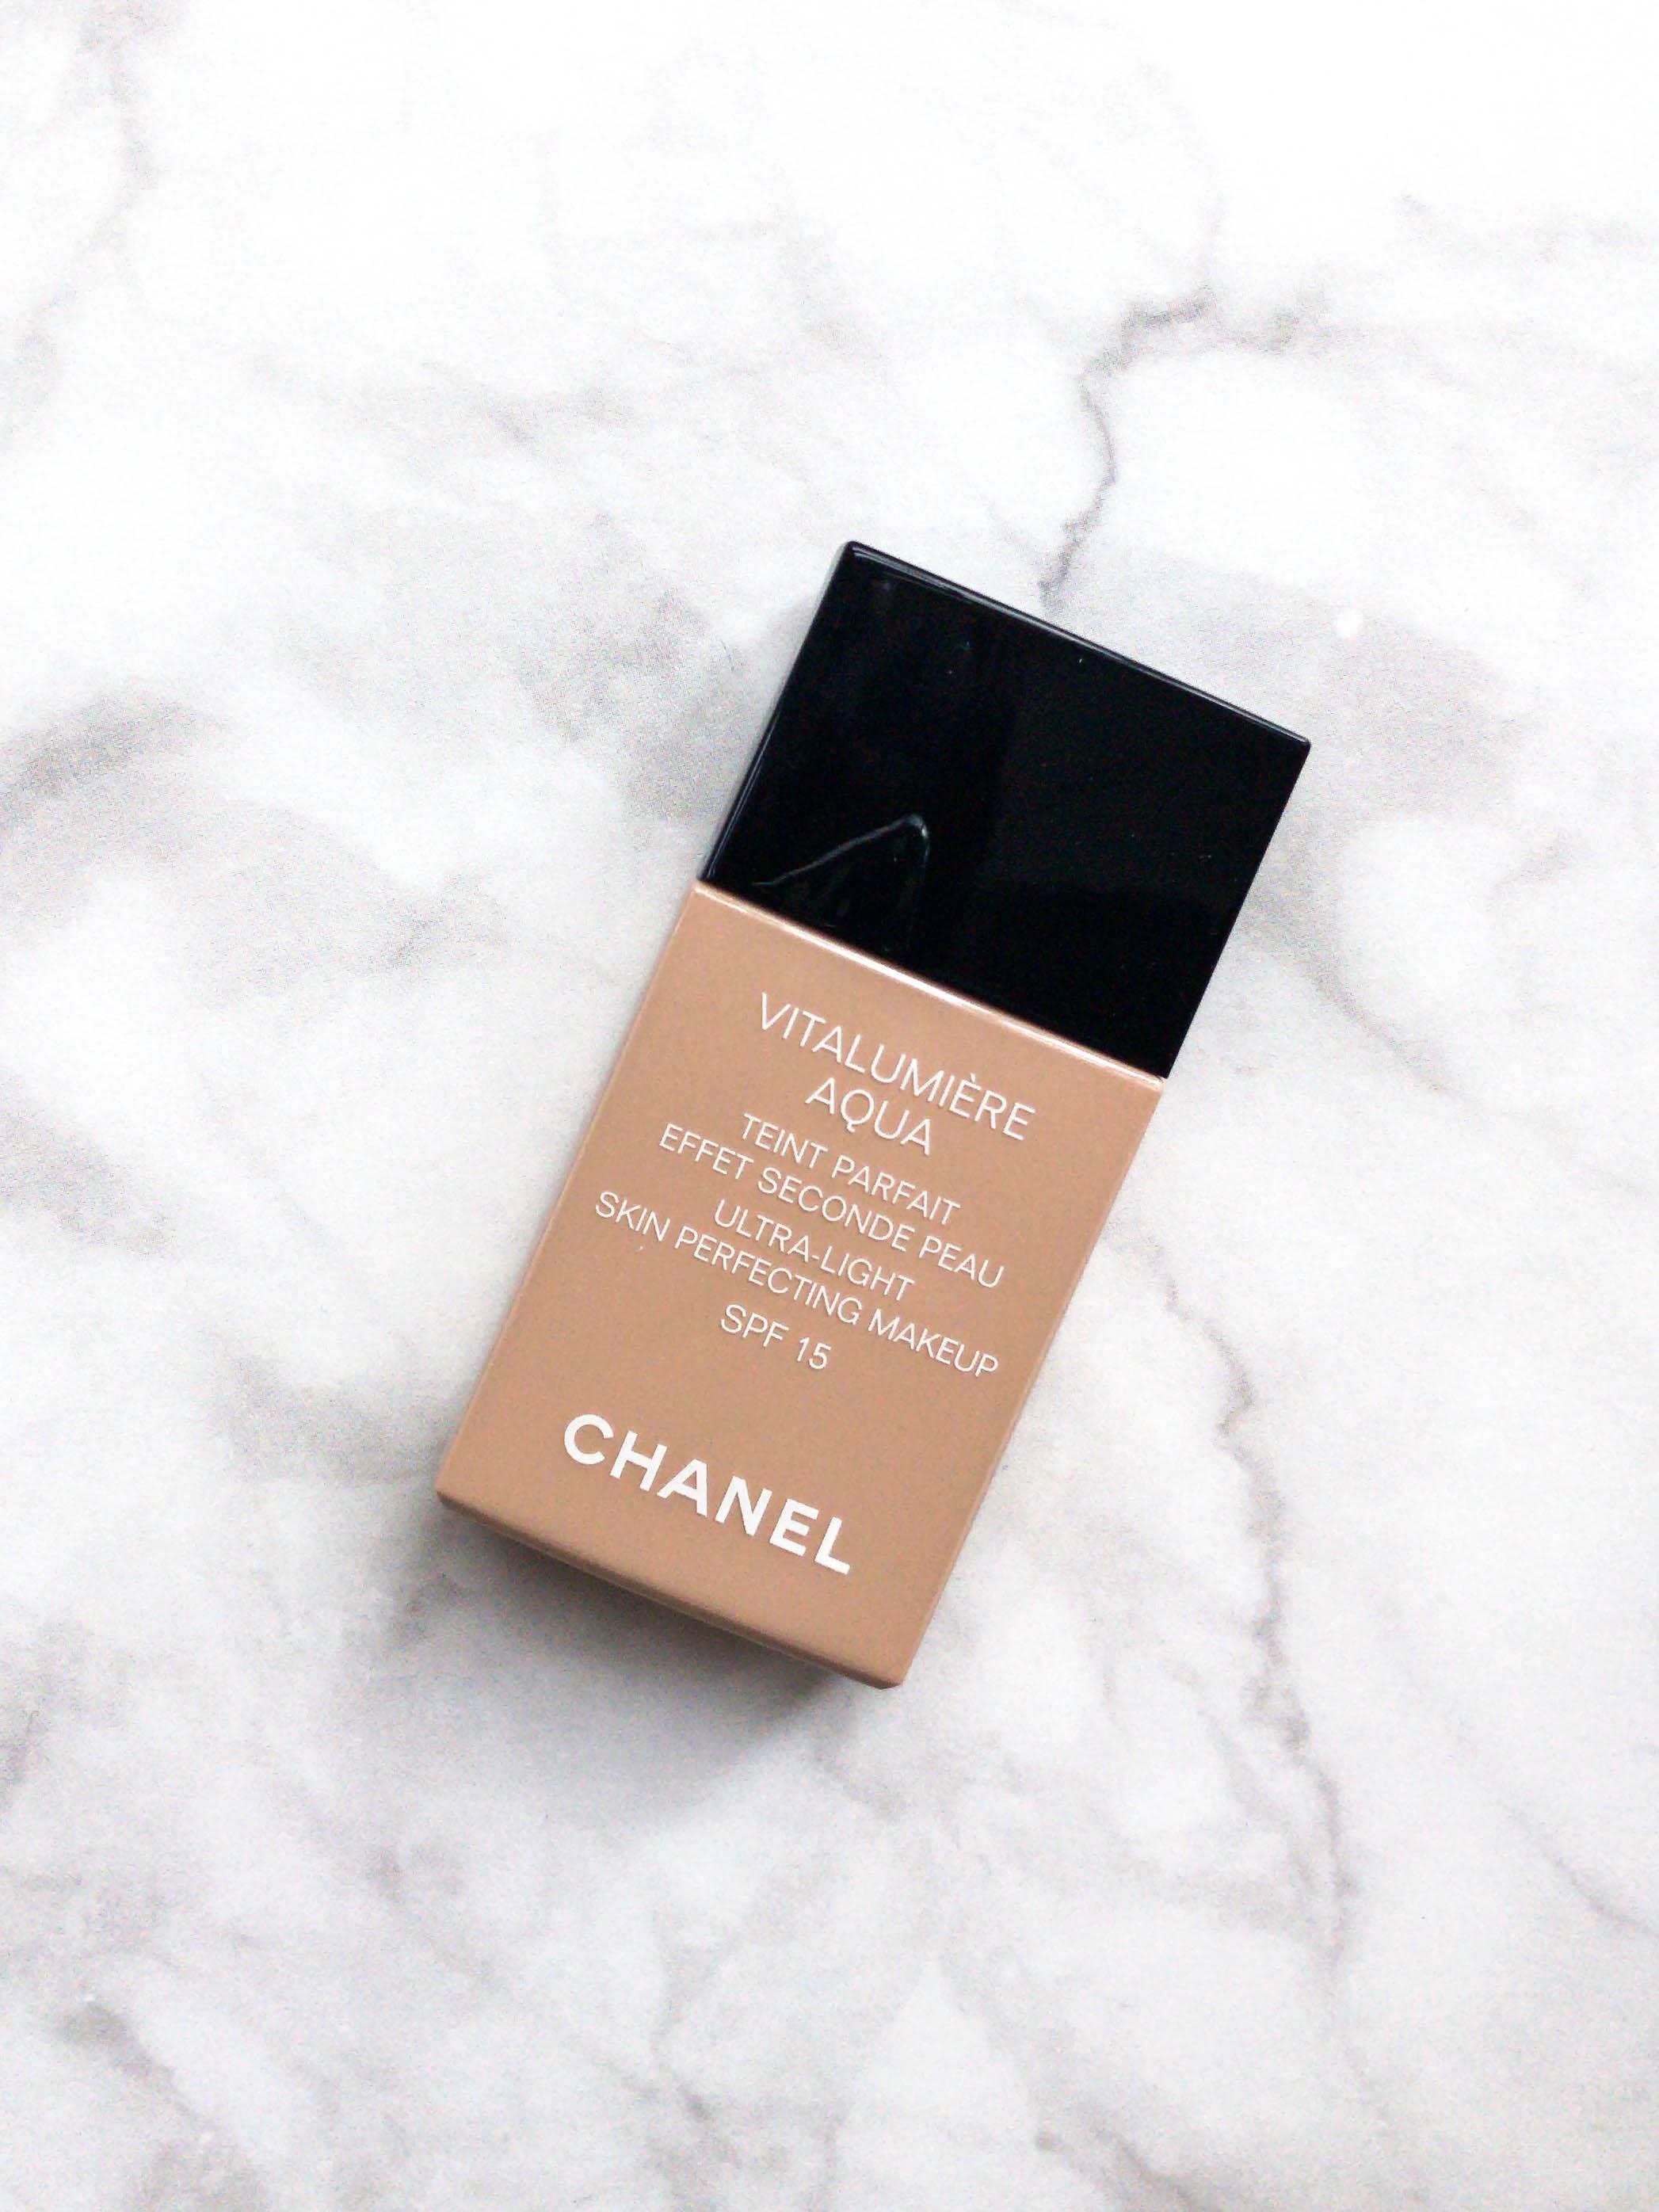 Teint-Perfektionierer: Chanel Vitalumière Aqua Foundation 
#beautylieblinge #chanel #foundation #chanelbeauty